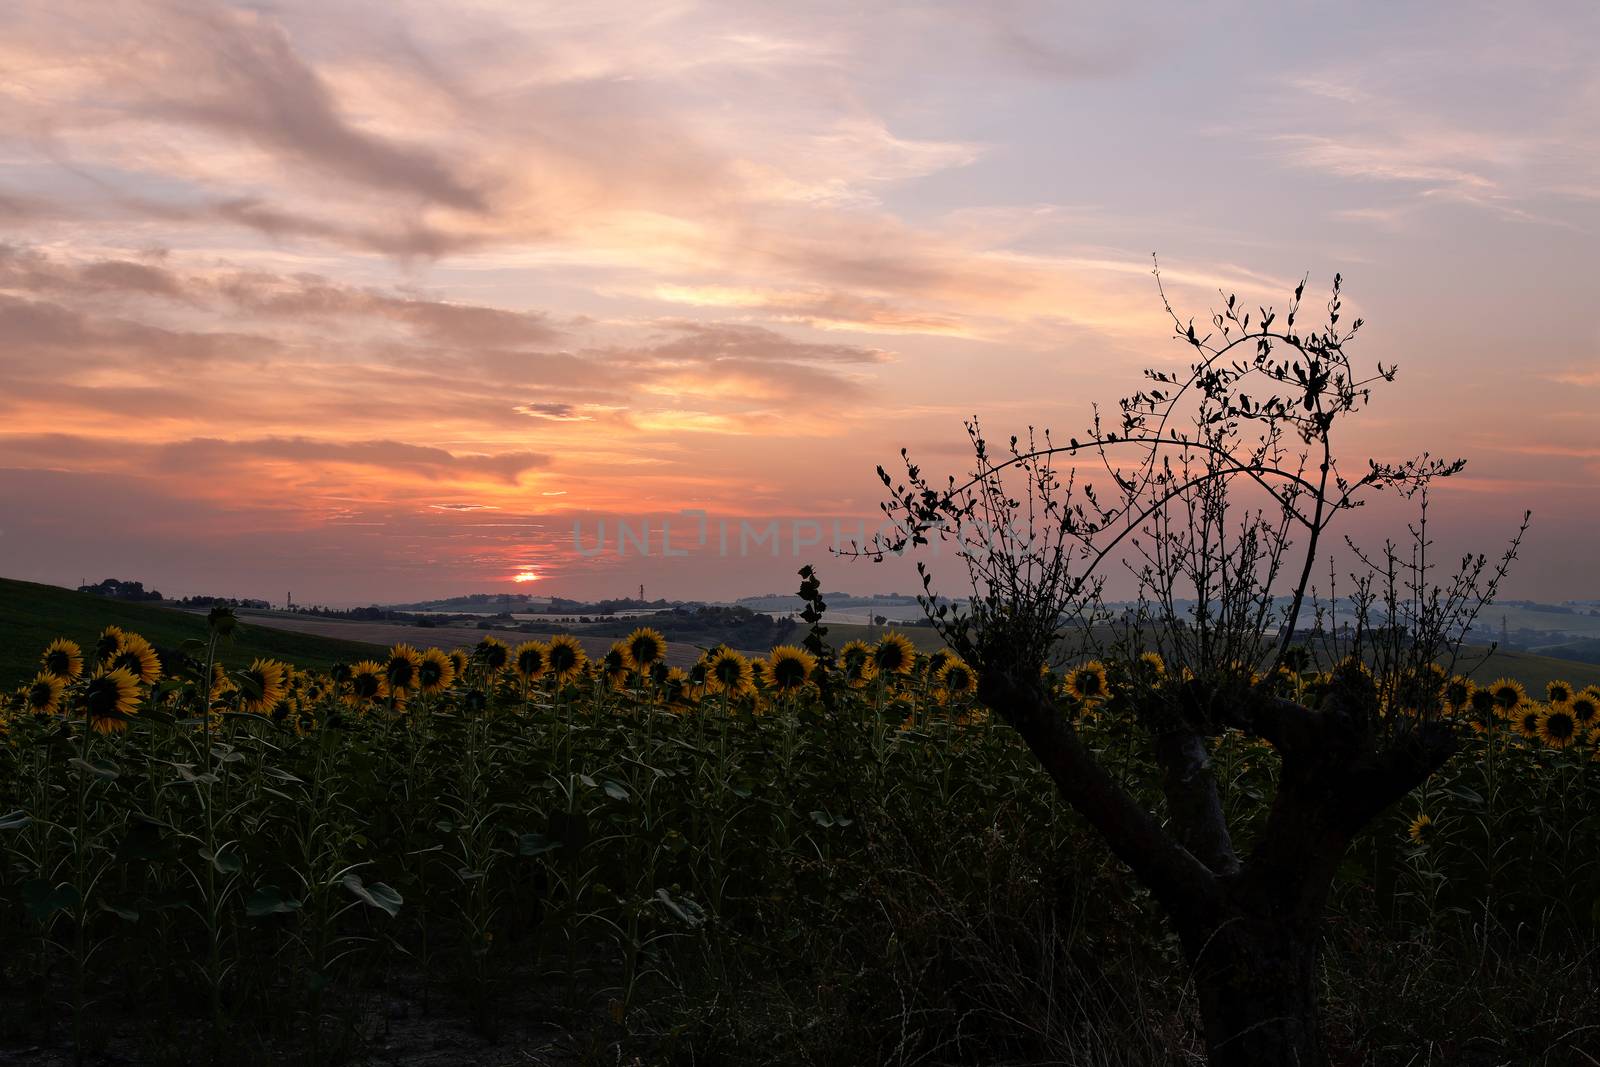 Field of blooming sunflowers by LuigiMorbidelli